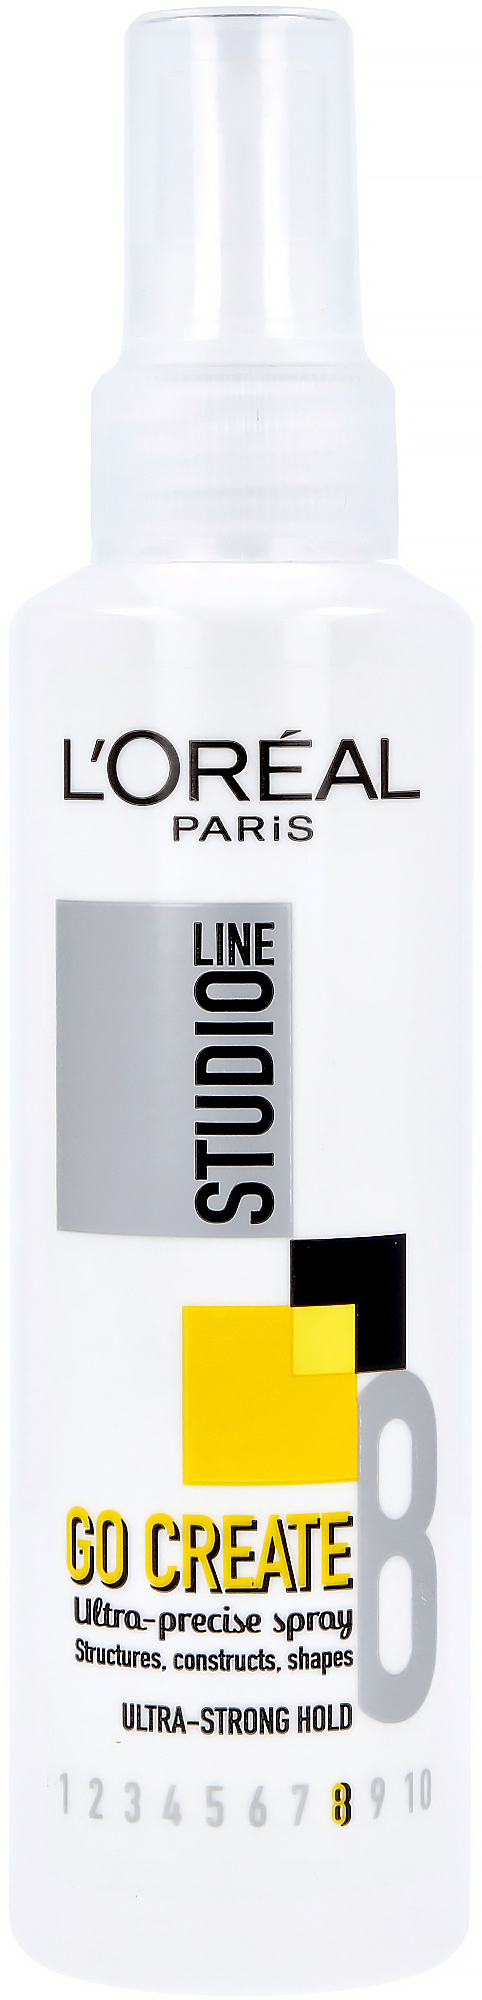 Loreal Paris Loréal Paris Studio Line Go Create Ultra-Precise Spray 150 ml  